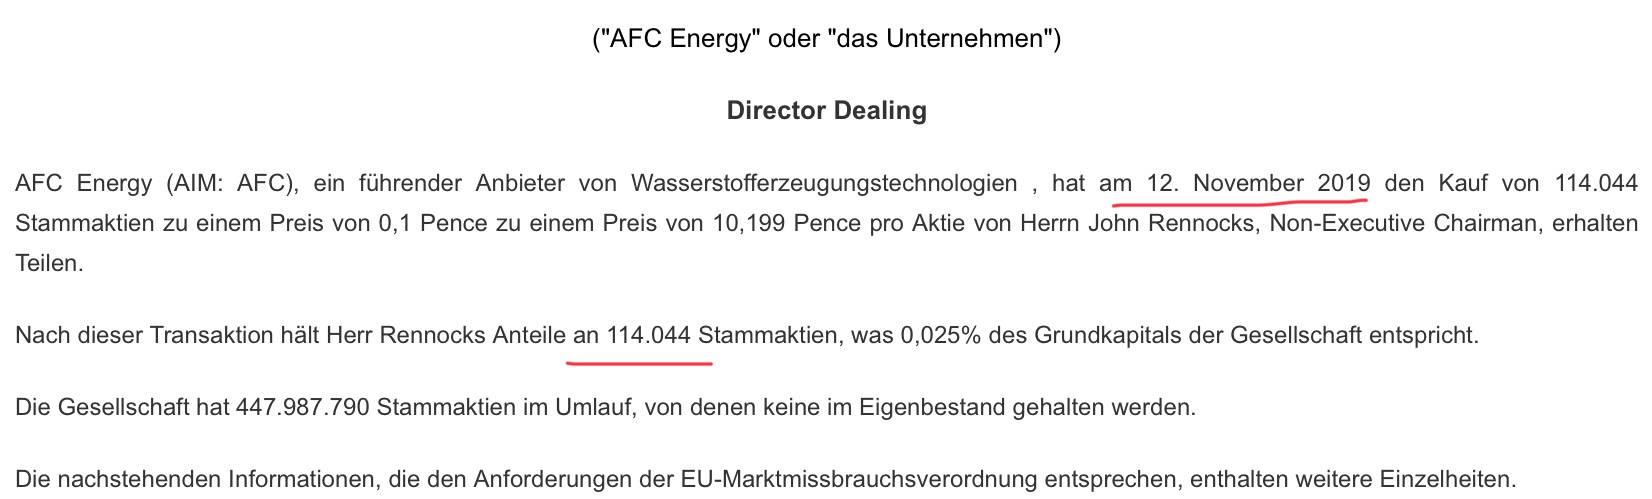 AFC Energy Aktie mit viel Potential 1144515